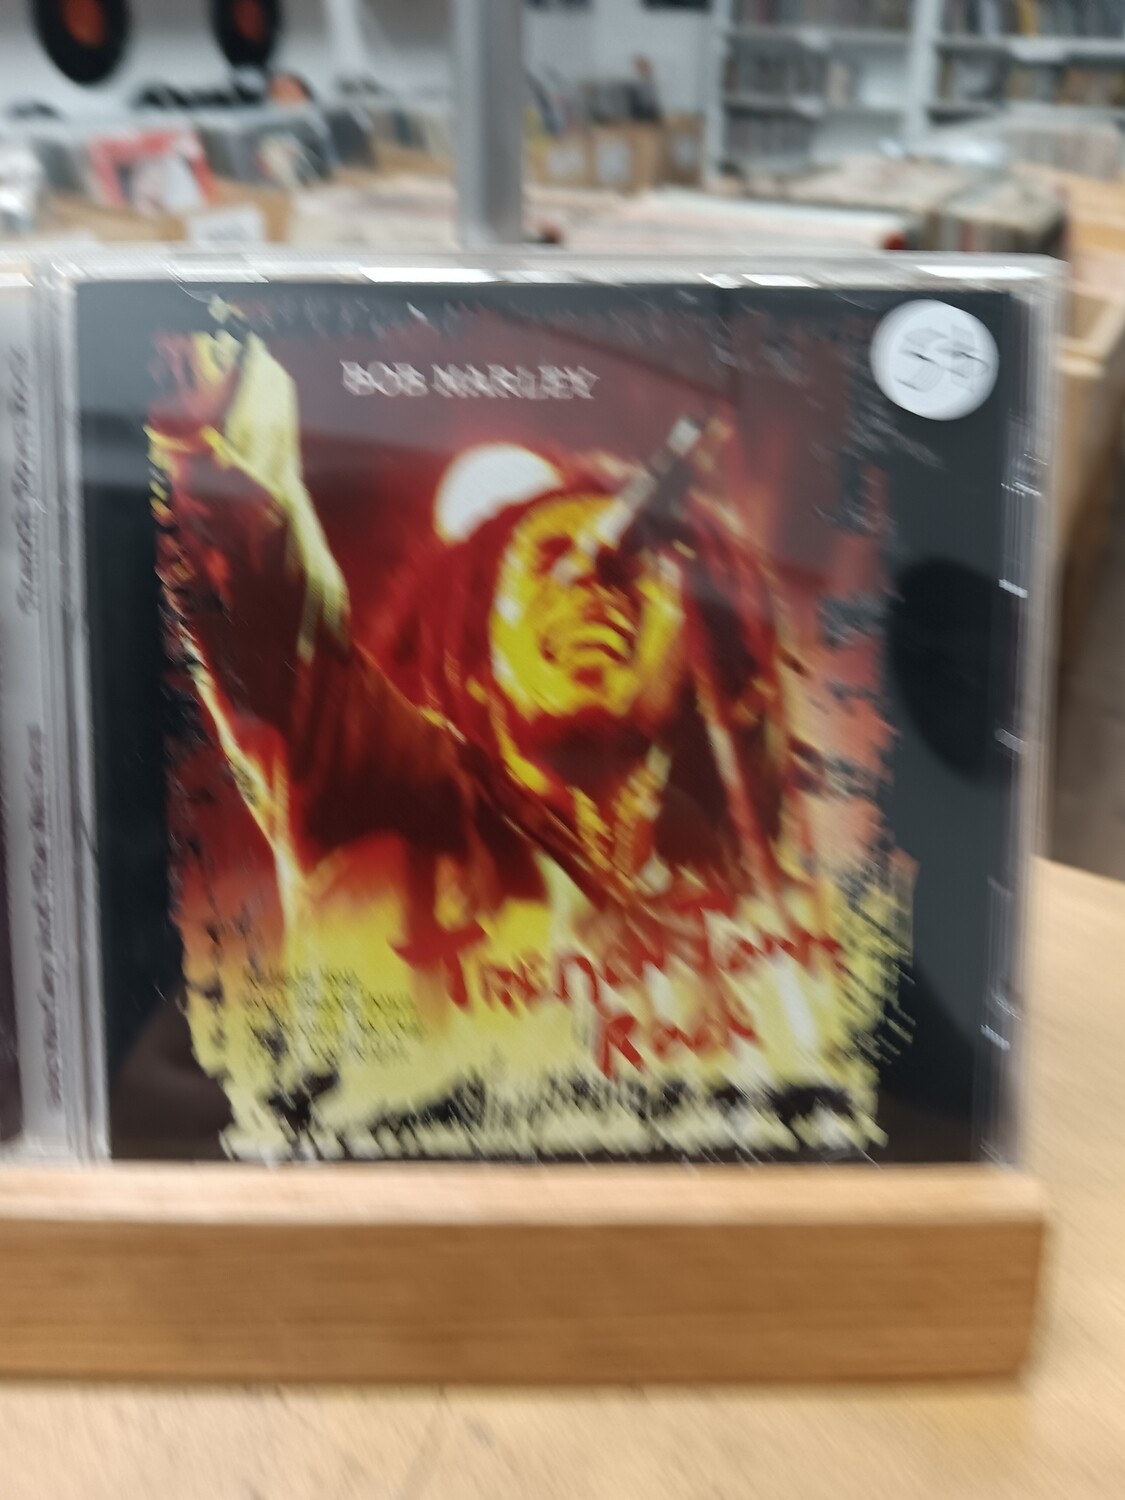 BOB MARLEY - Trench Town Rock (CD)